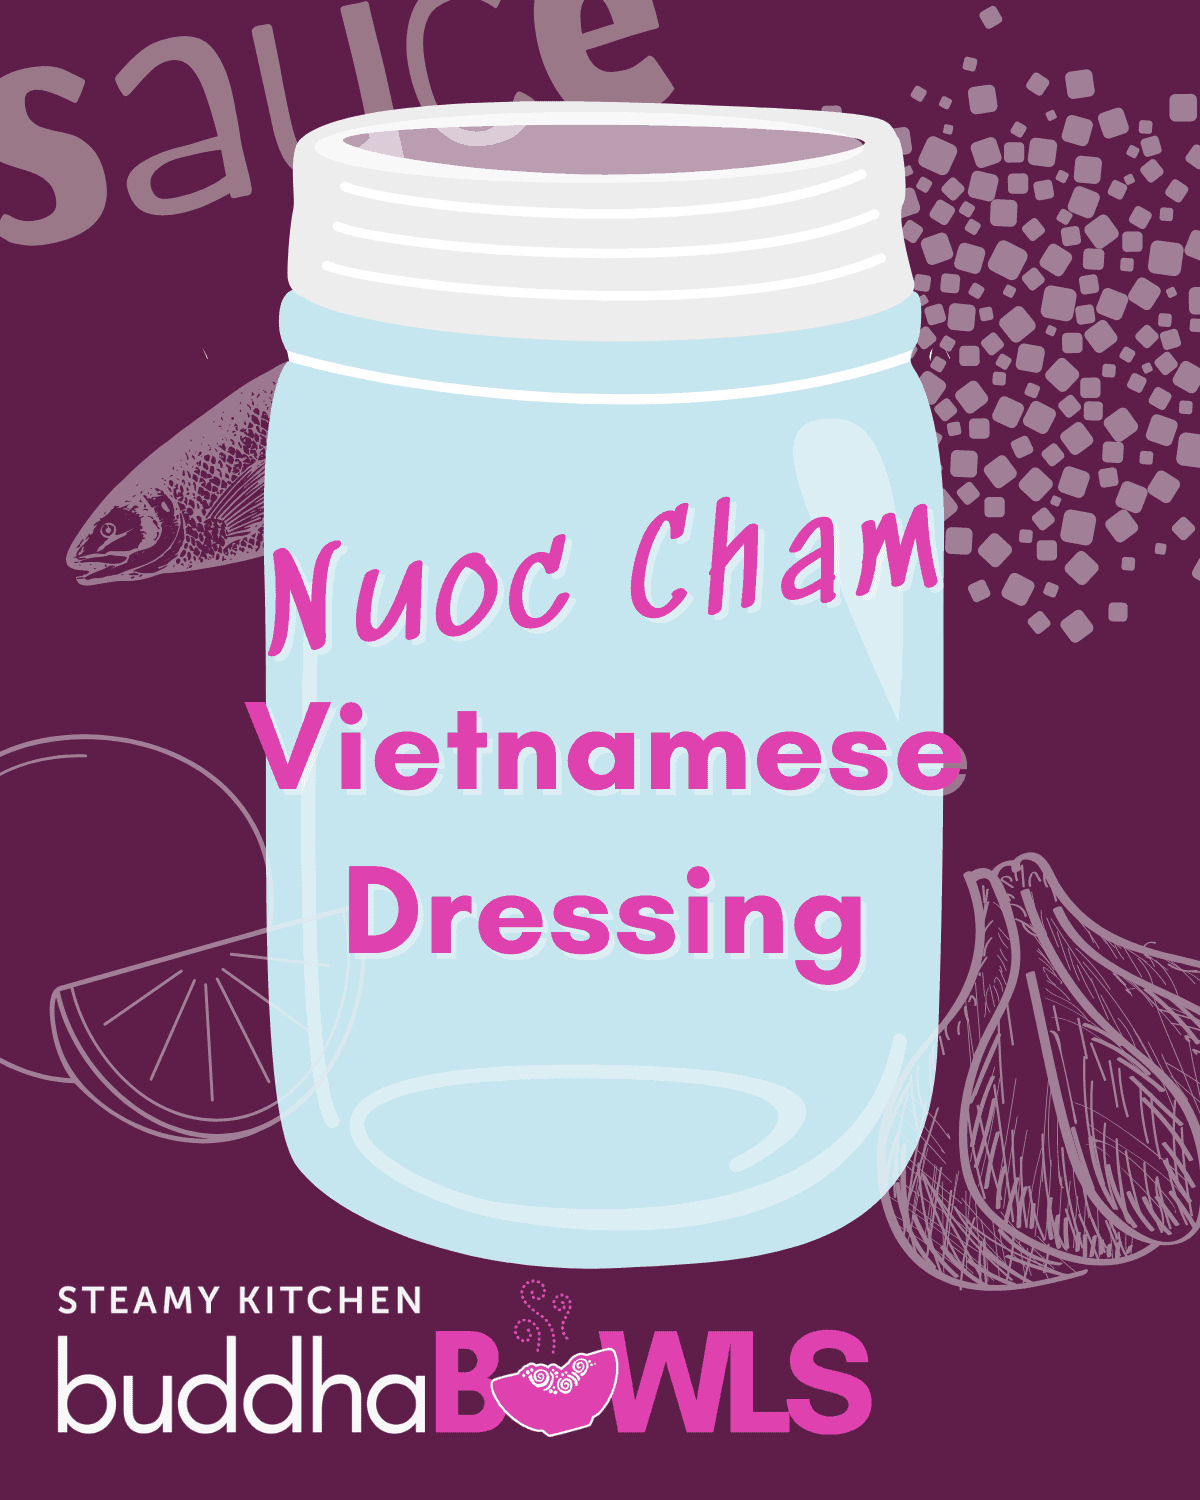 Nuoc Cham (Vietnamese Dressing)